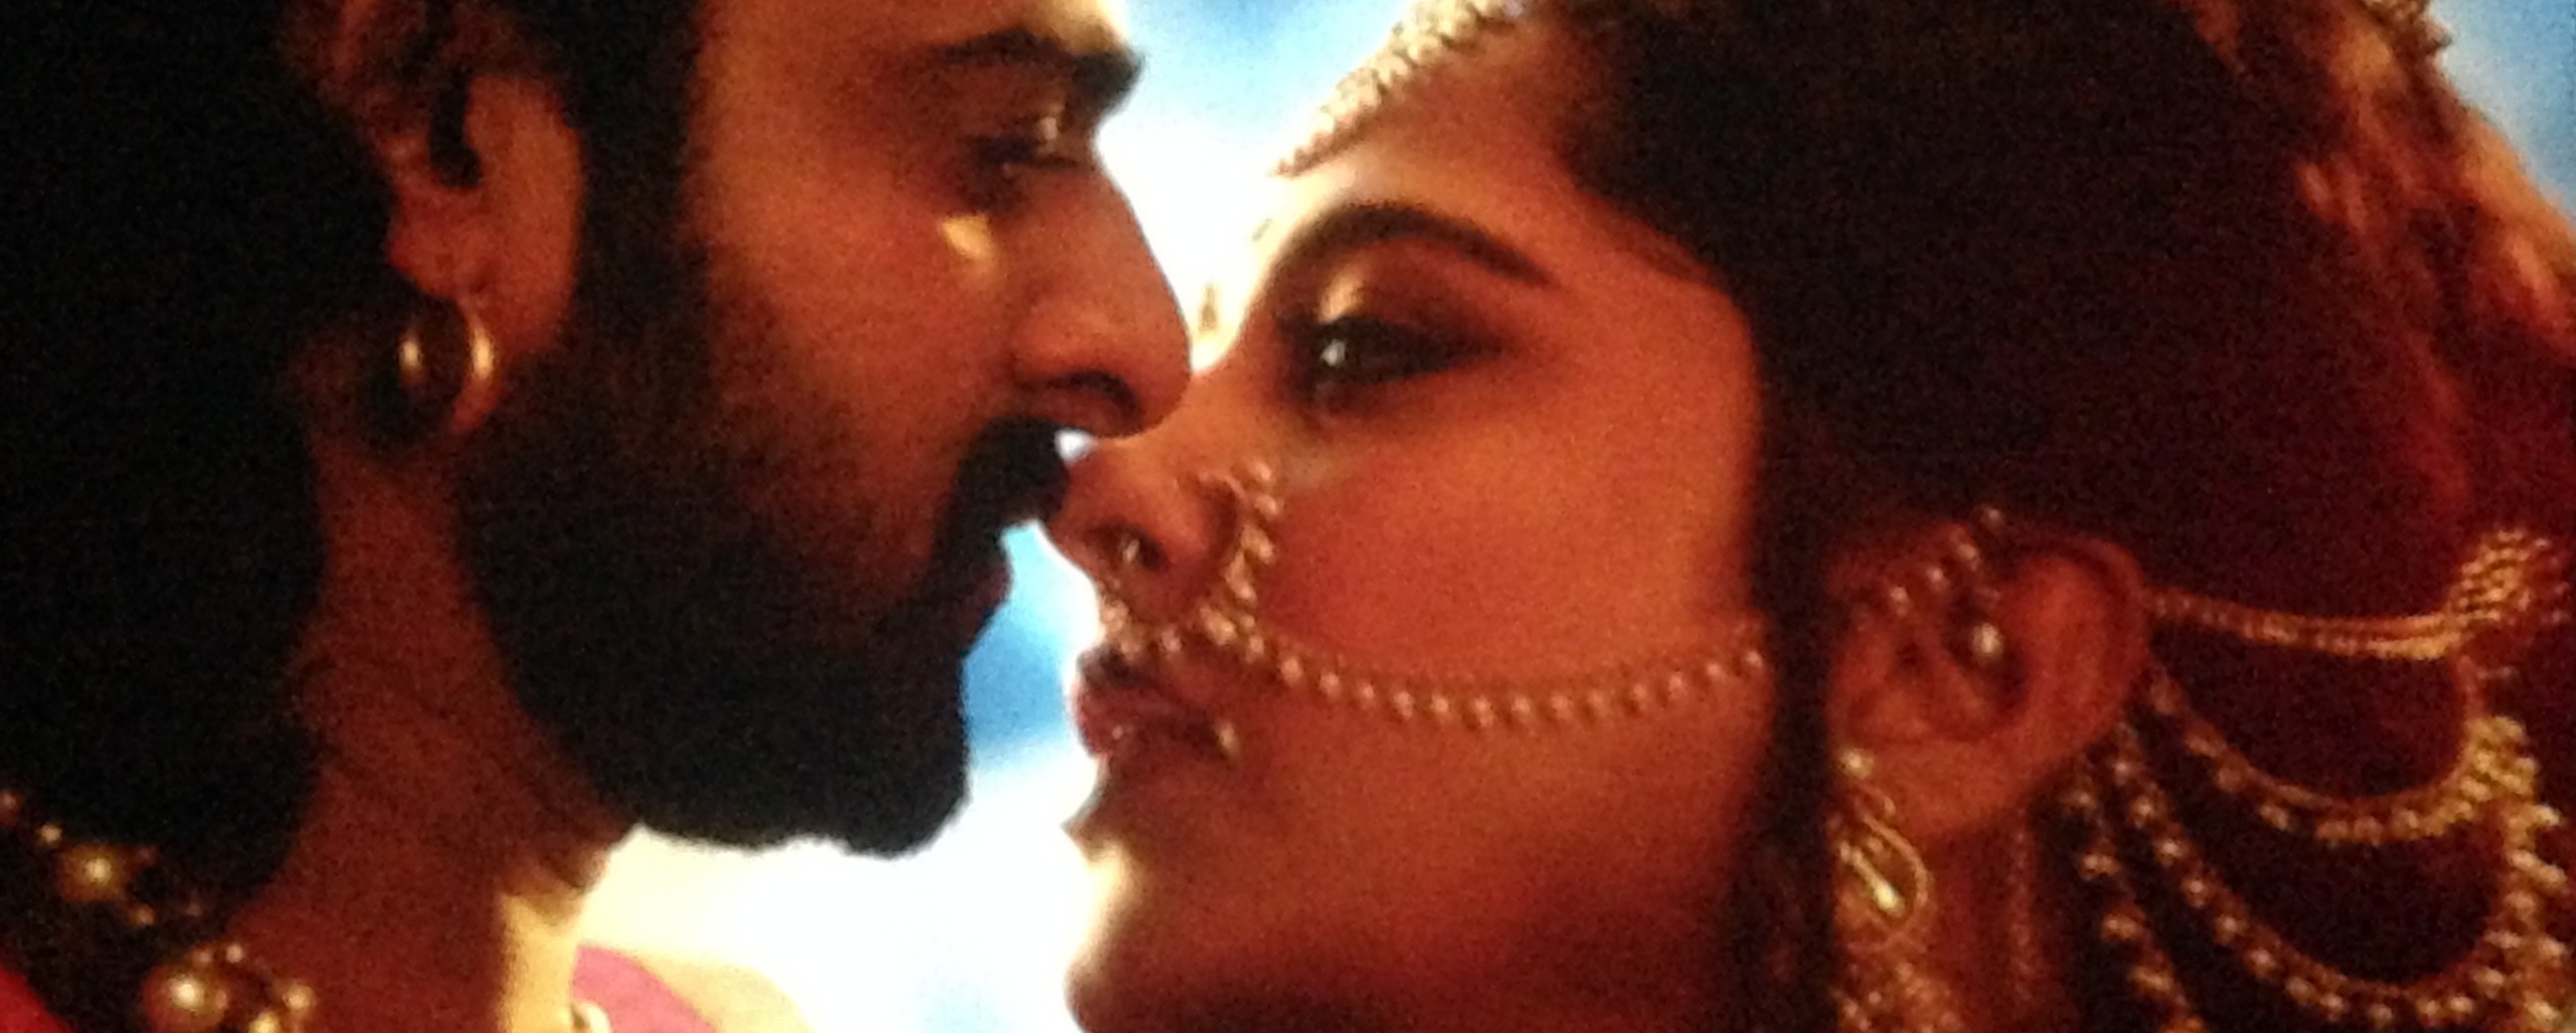 Anushka and Prabhas in Bahubali 2, Anushka Prabhas kiss in Bahubali 2 